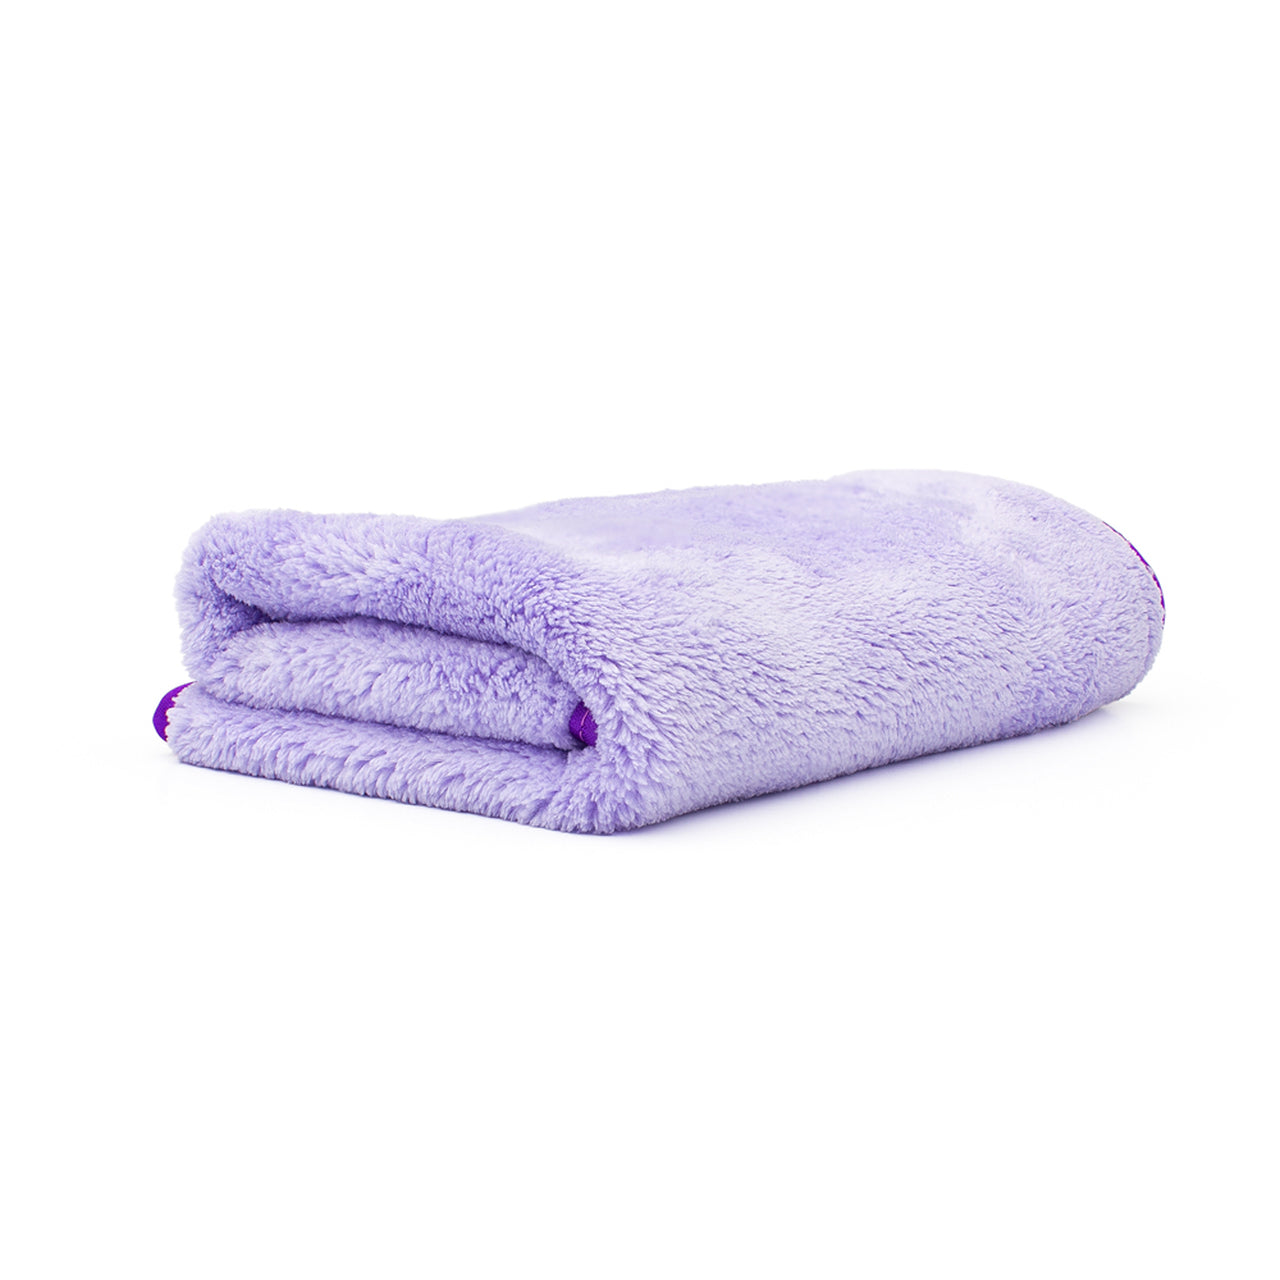 The Rag Company Minx Royale Coral Fleece 16X16 Microfiber Towel Lavender